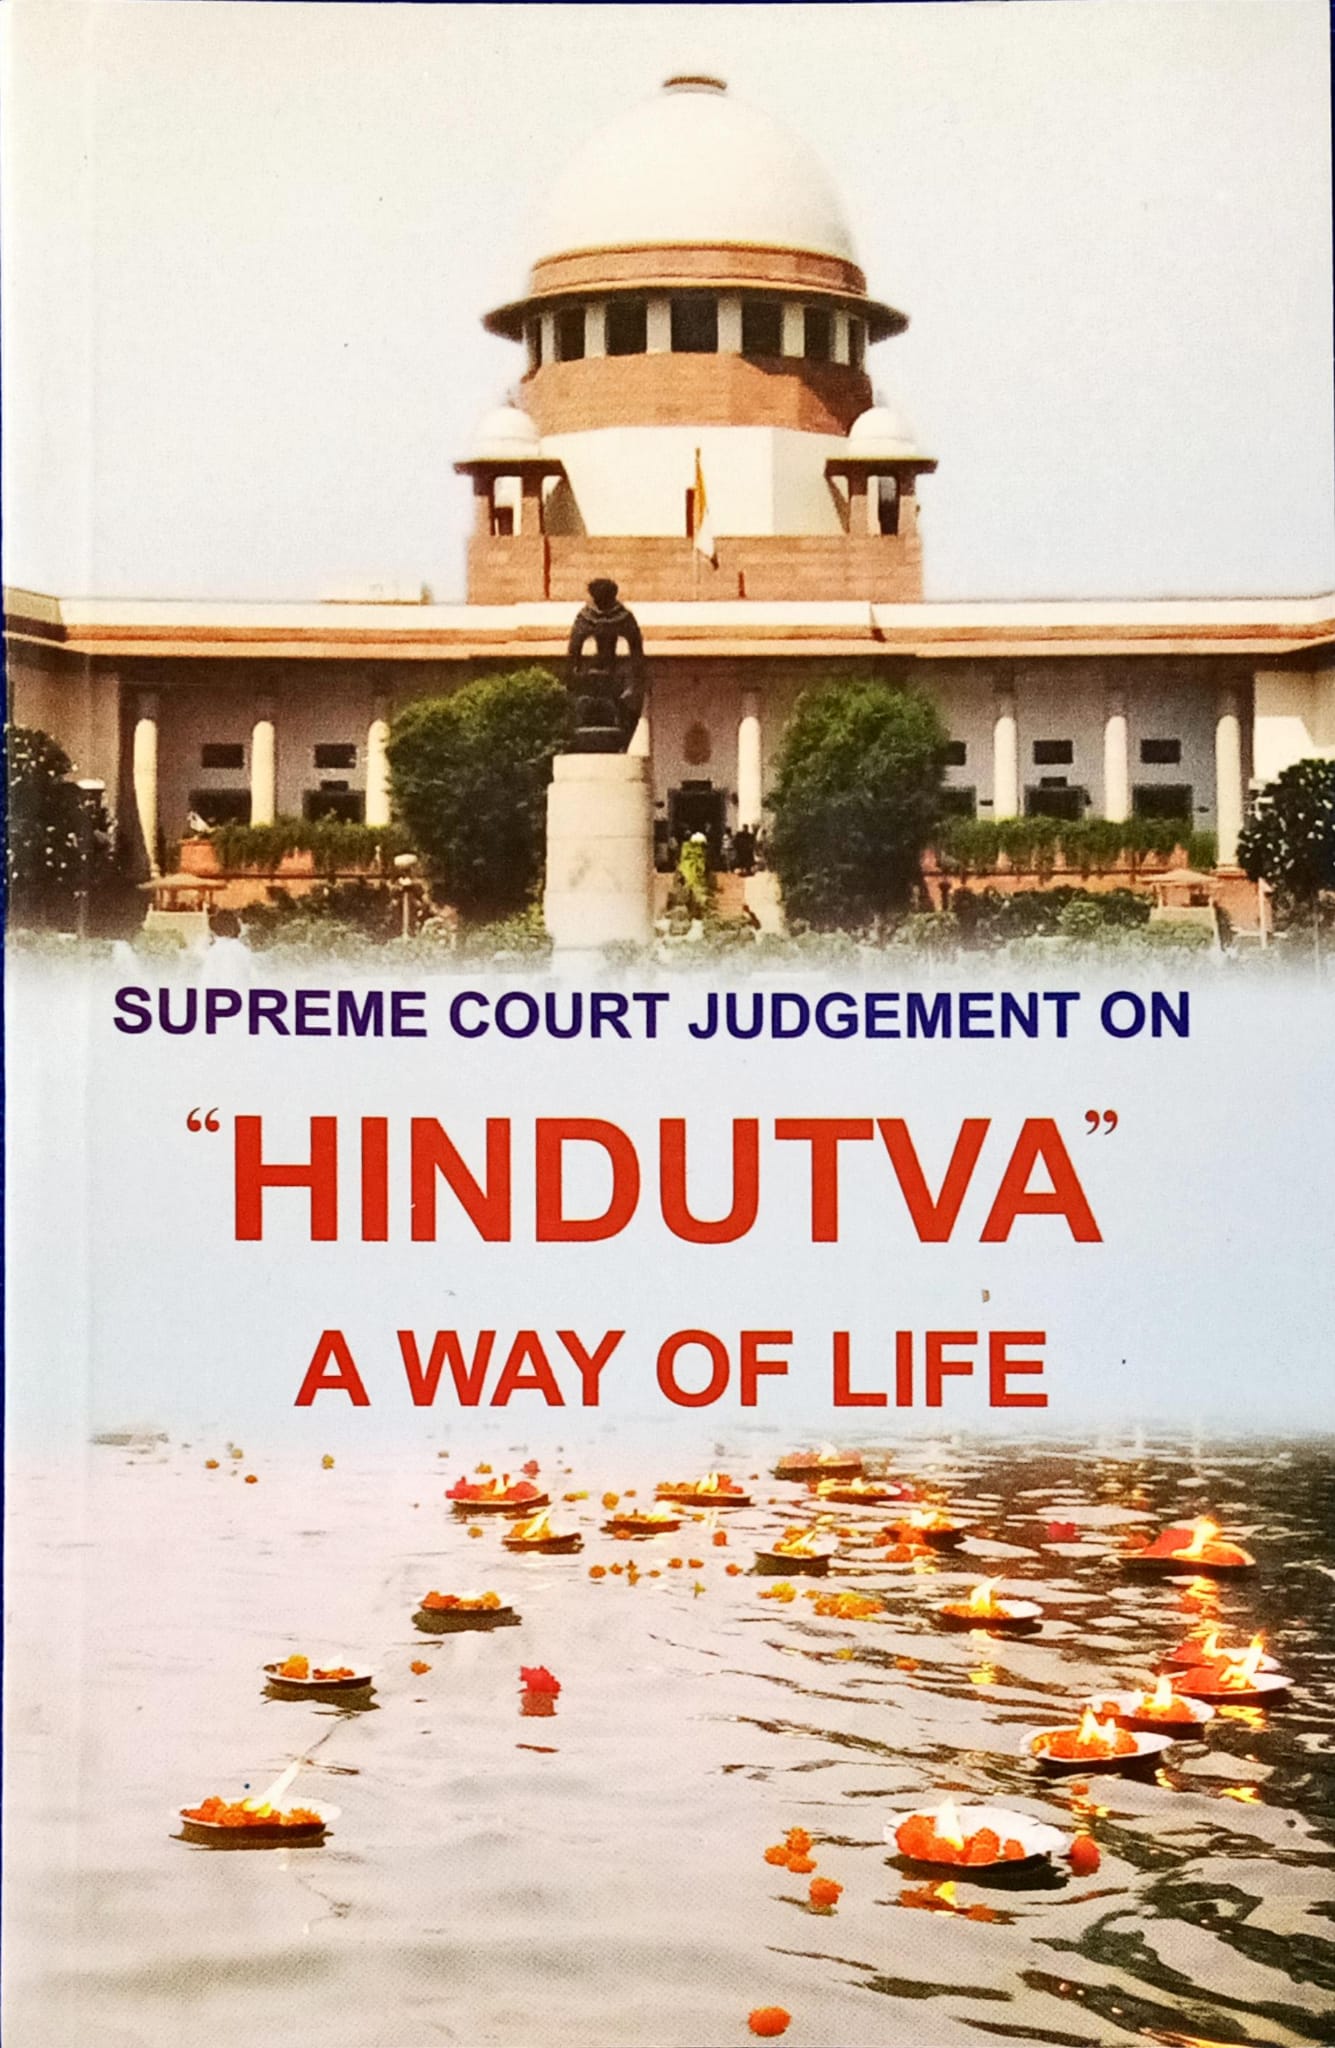 Supreme Court Judgement on Hindutva A Way of Life